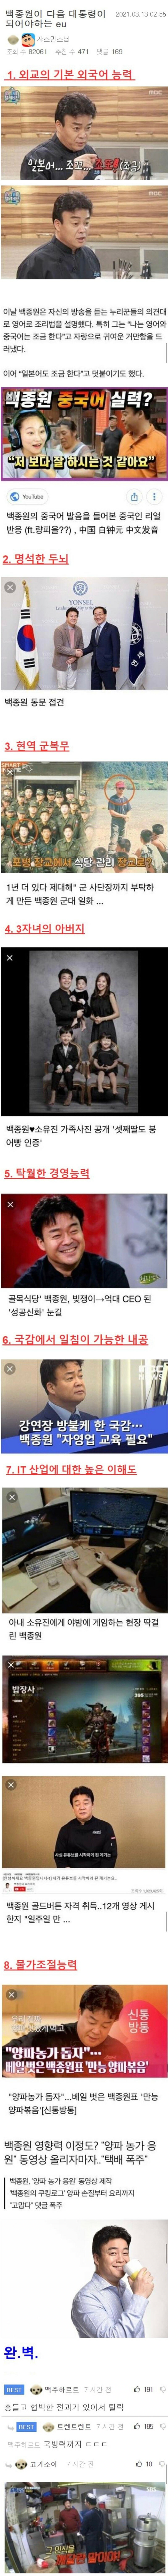 The reason why Baek Jong-won should be president.